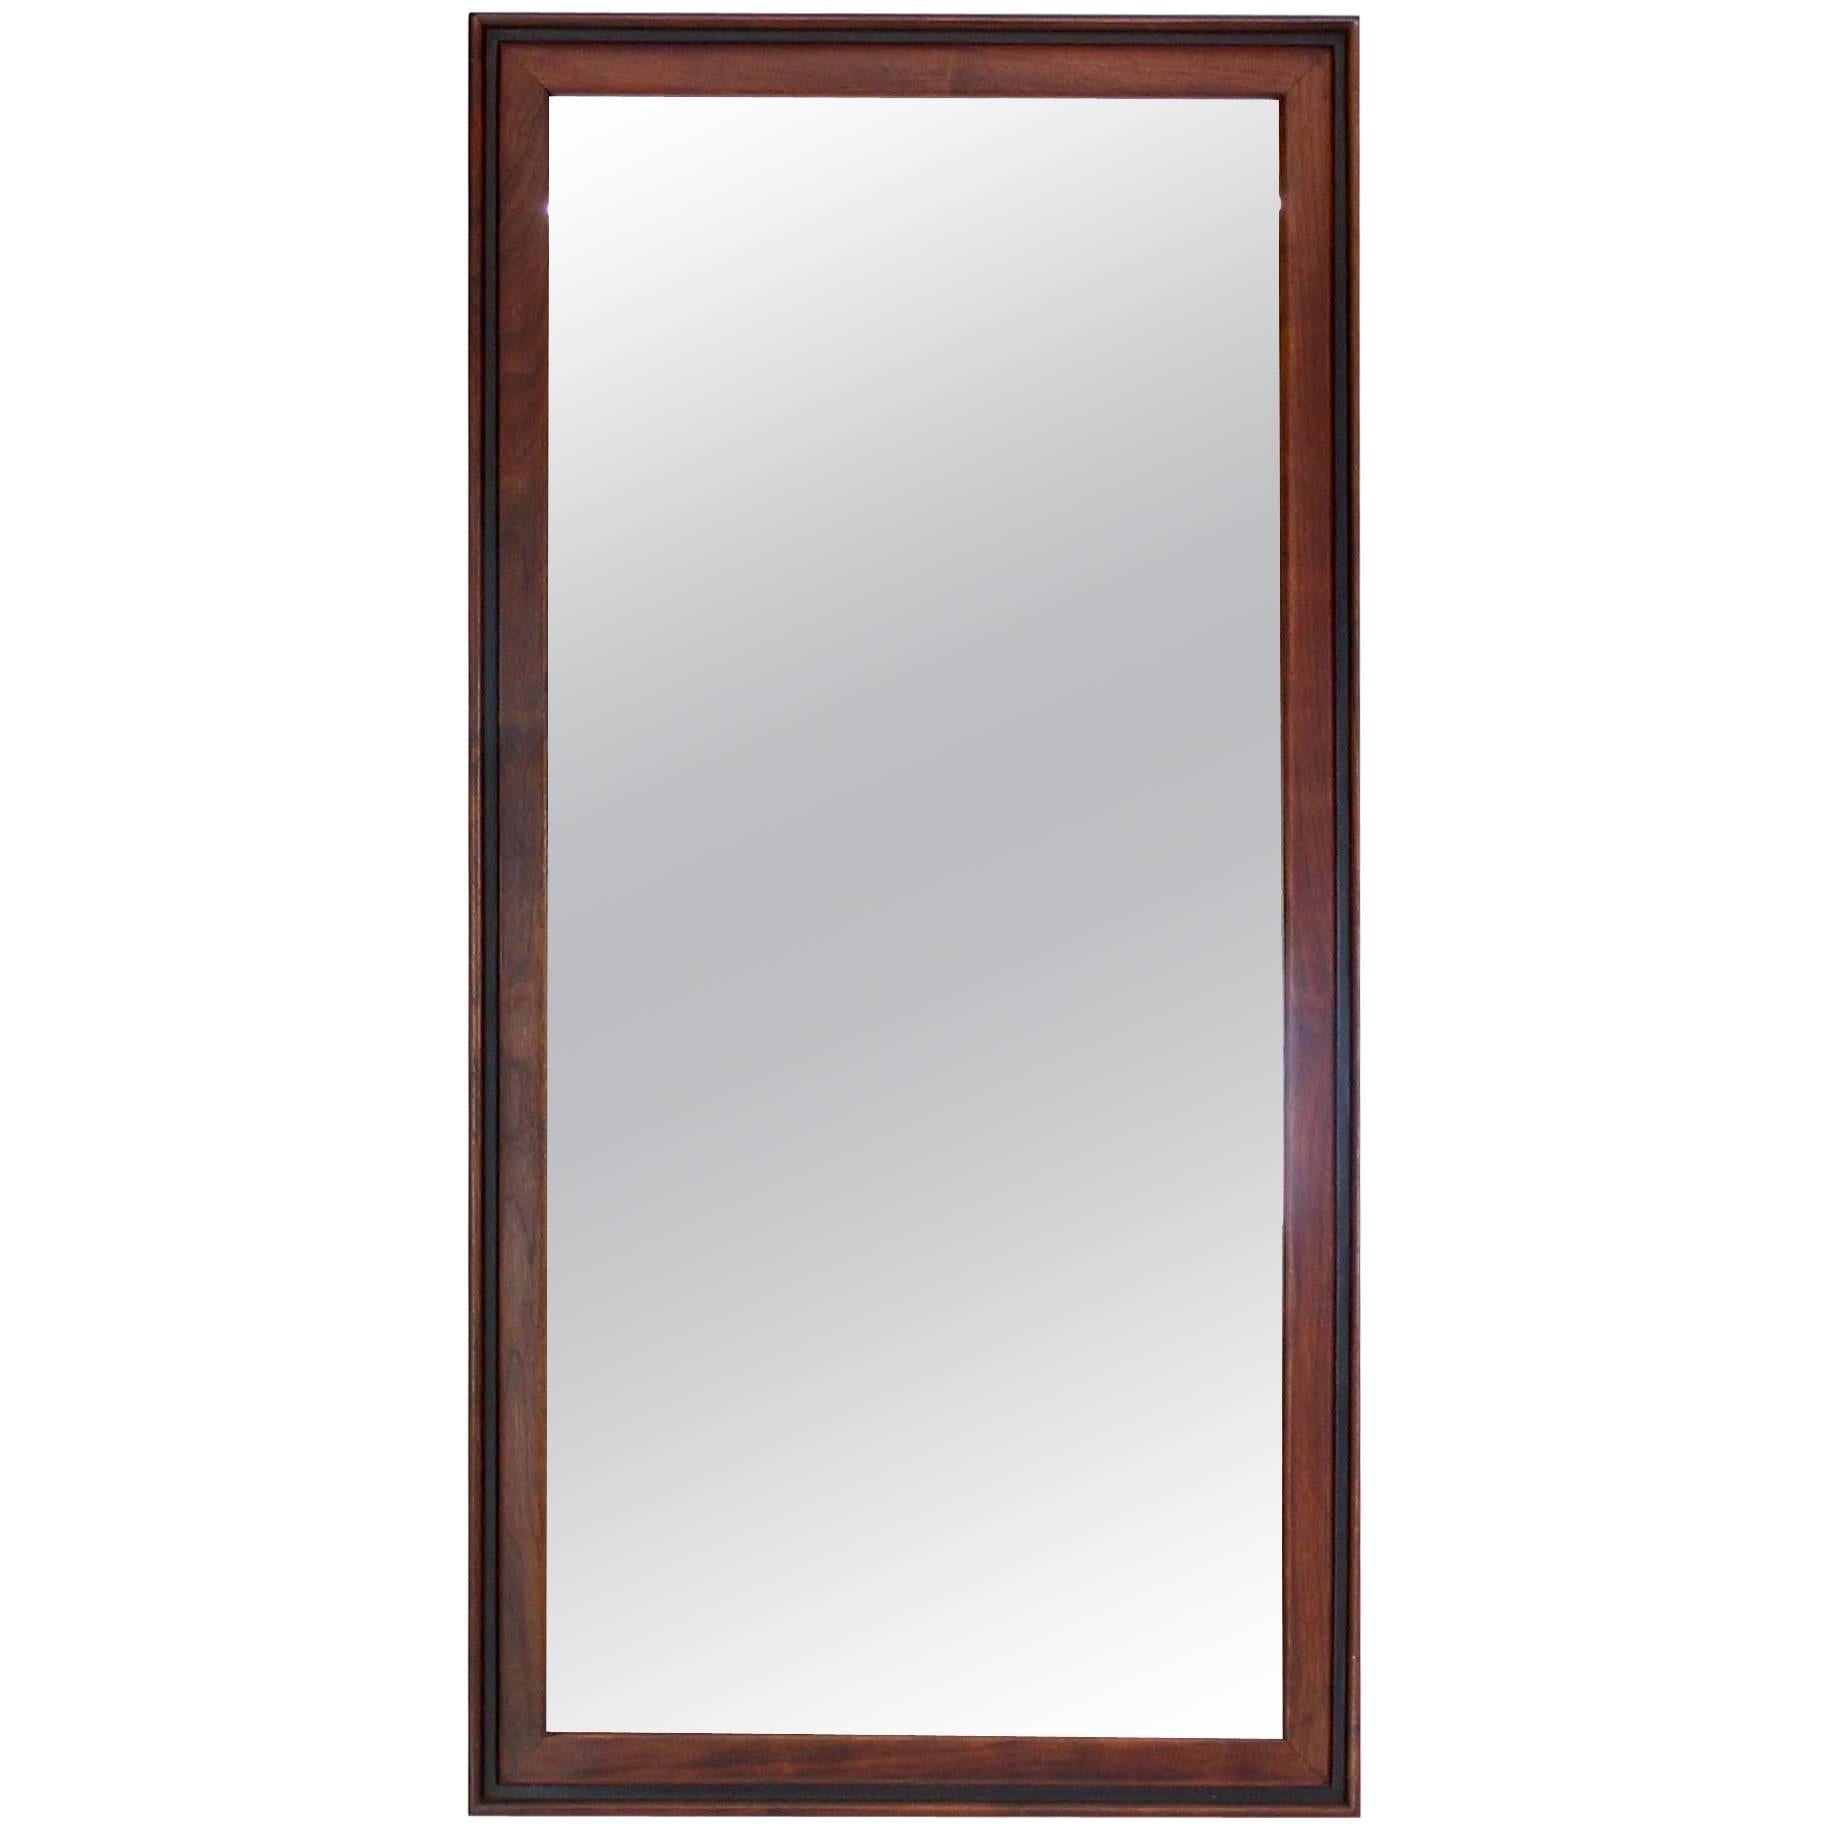 Oiled Walnut Frame Mid Century Modern Rectangular Mirror. 